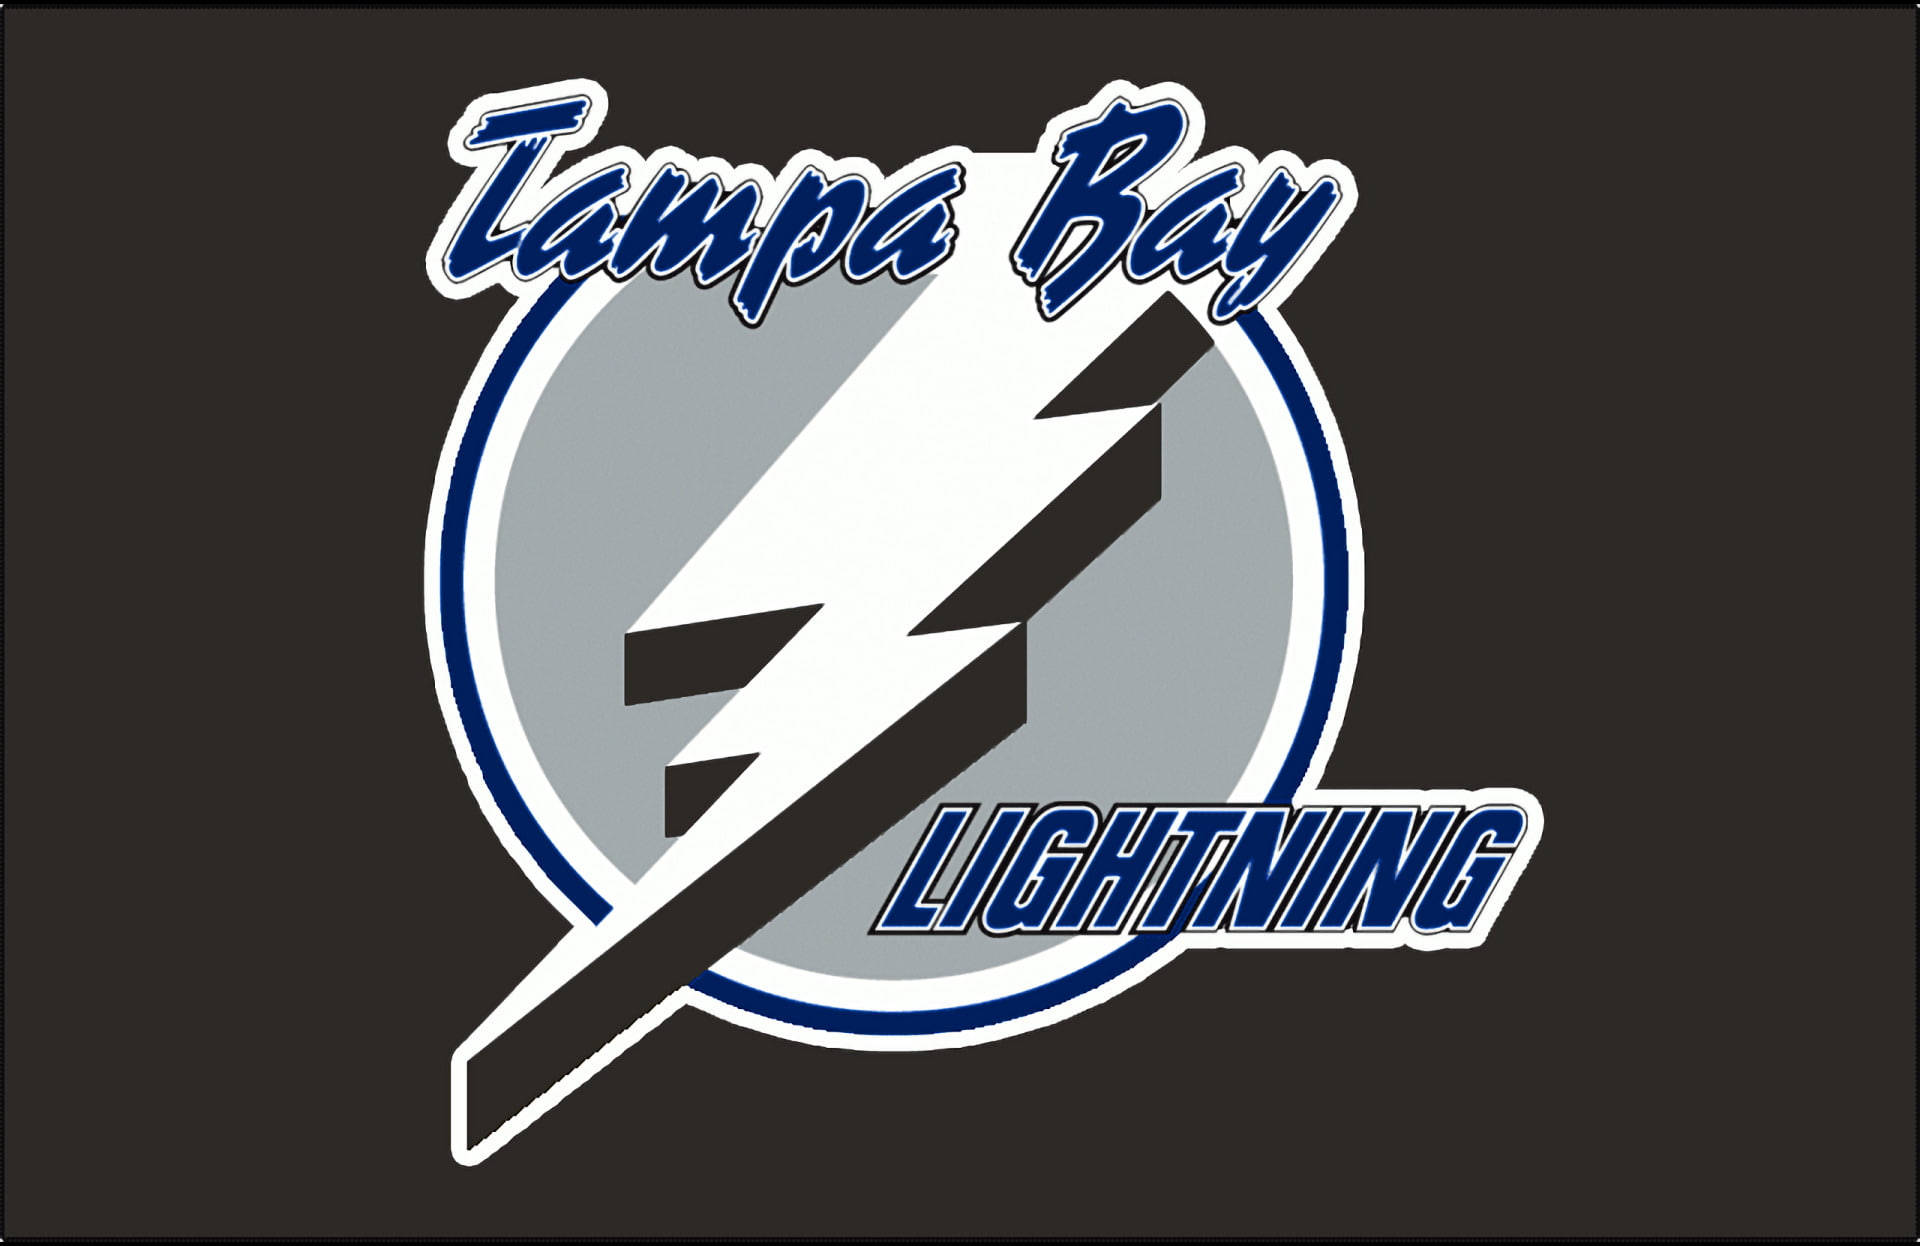 Caption: Thrilling Energy - The Tampa Bay Lightning logo against a black backdrop. Wallpaper